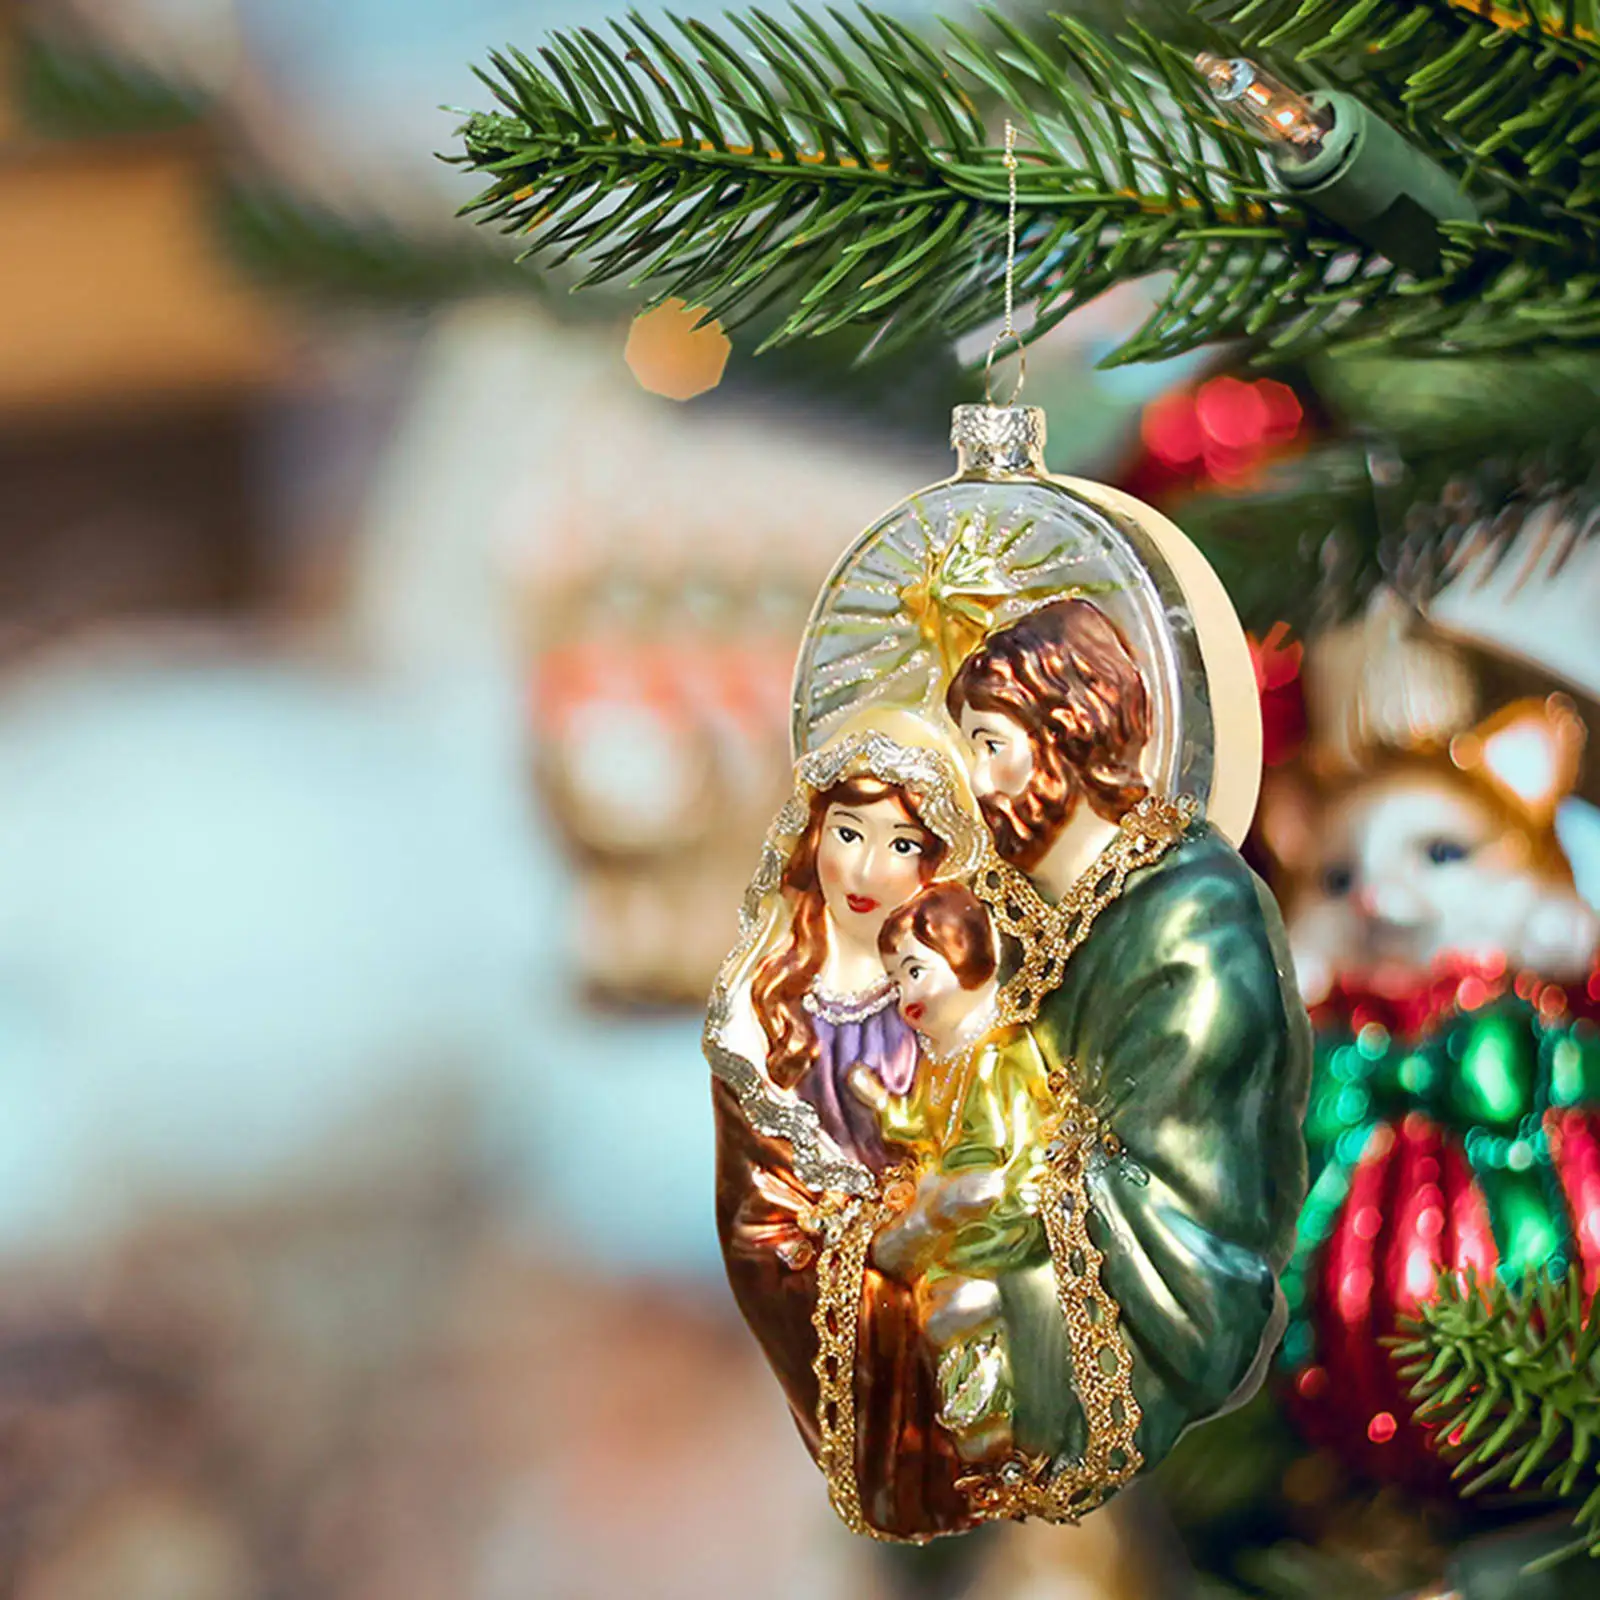 Exquisite Christmas Tree Pendant Saint Joseph Christian Decor Antique Baby Jesus for Home